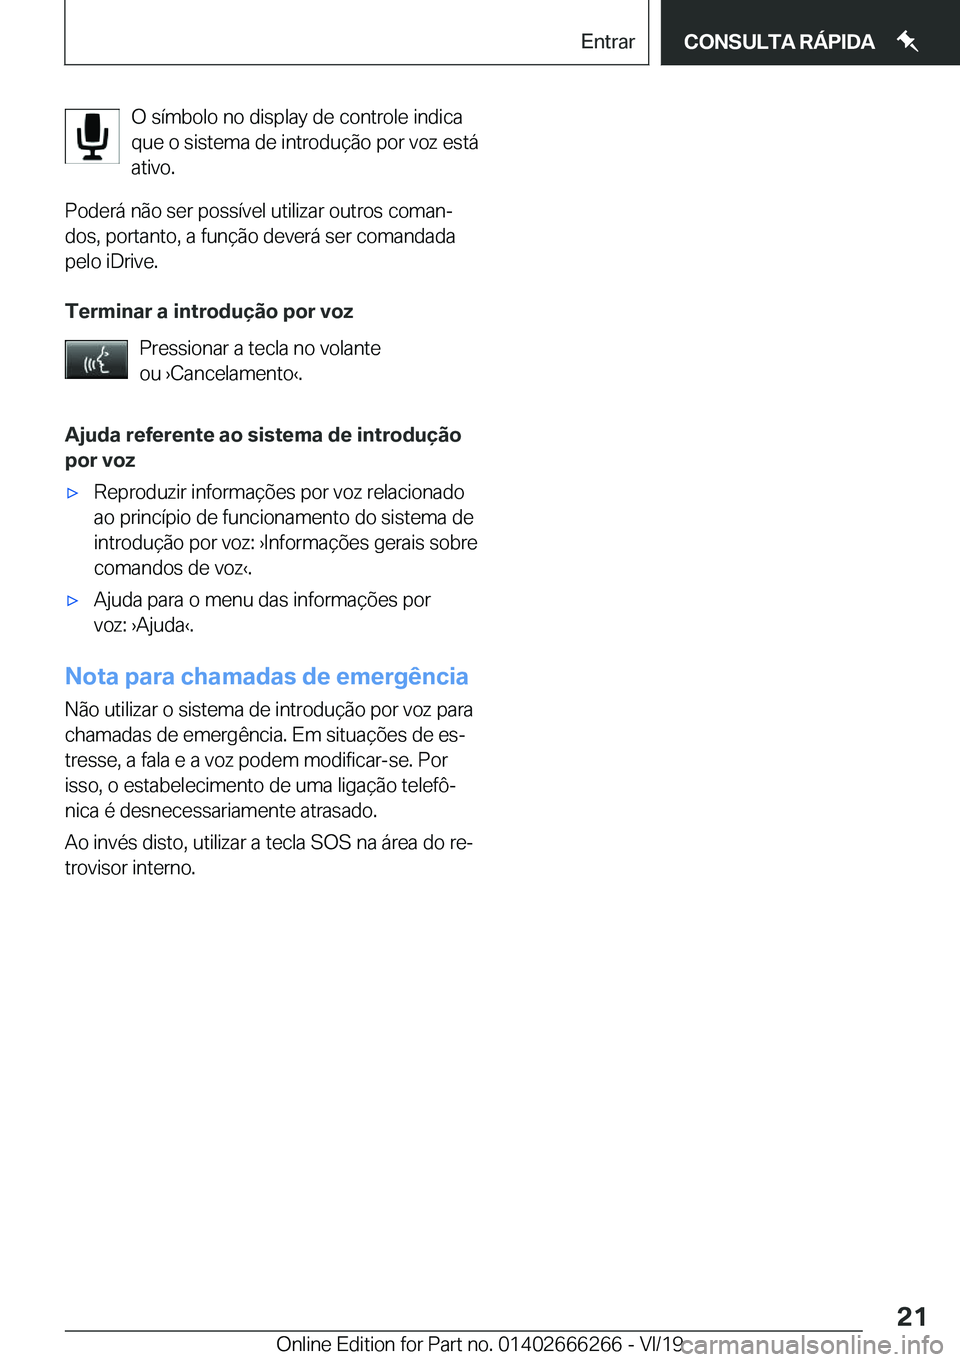 BMW 2 SERIES COUPE 2020  Manual do condutor (in Portuguese) �O��s�